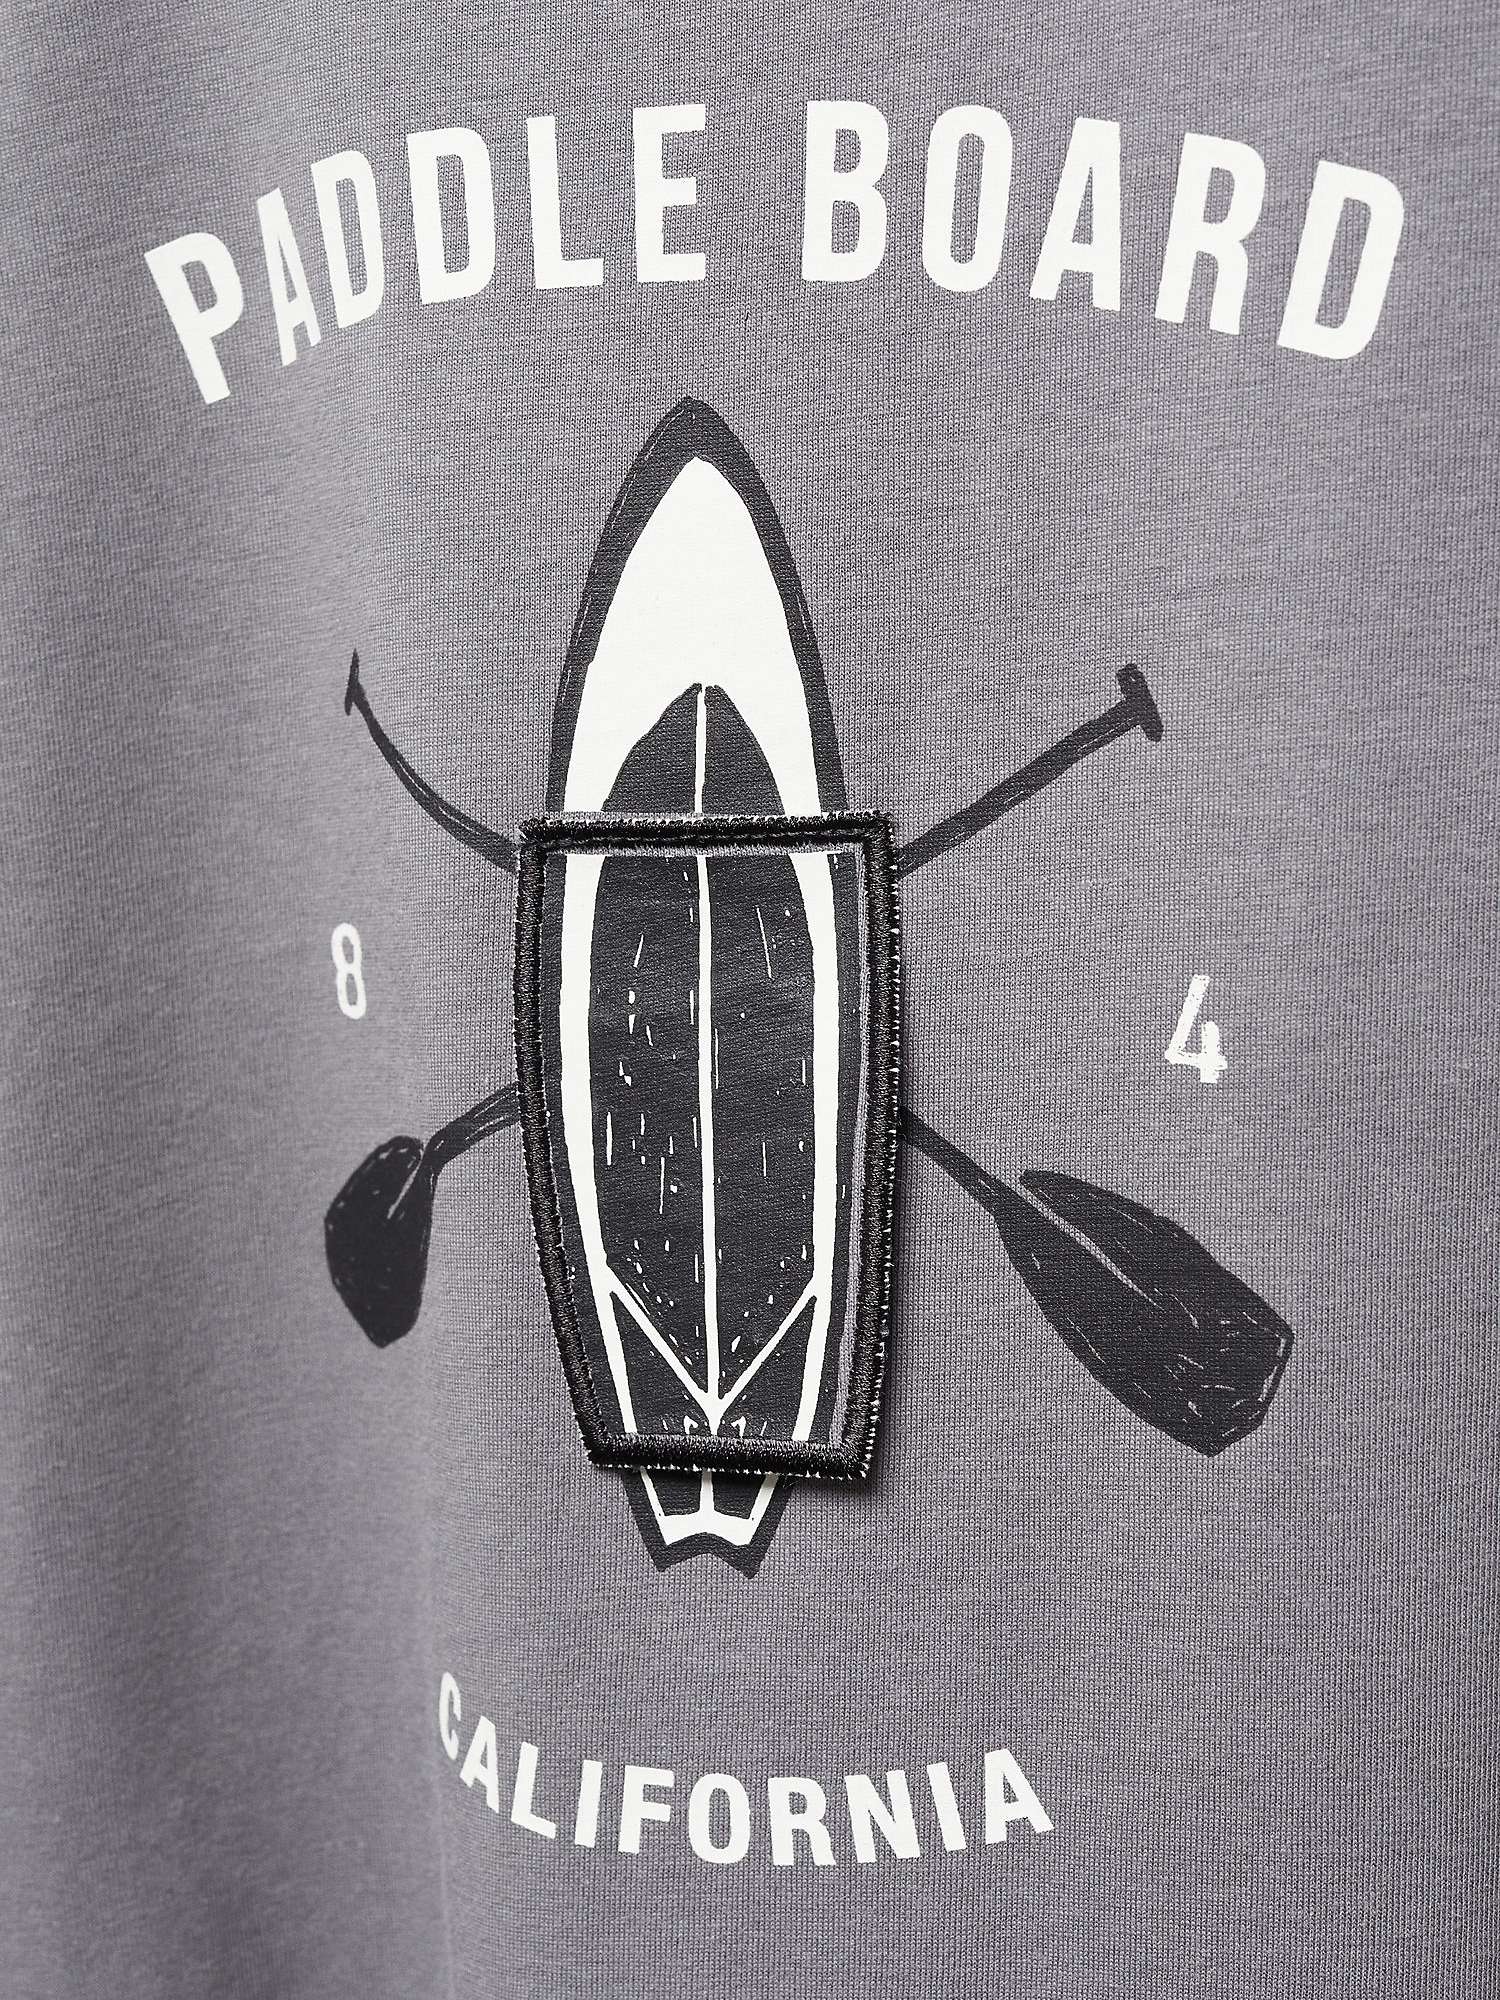 Buy Mango Kids' Paddle Board T-Shirt, Charcoal Online at johnlewis.com